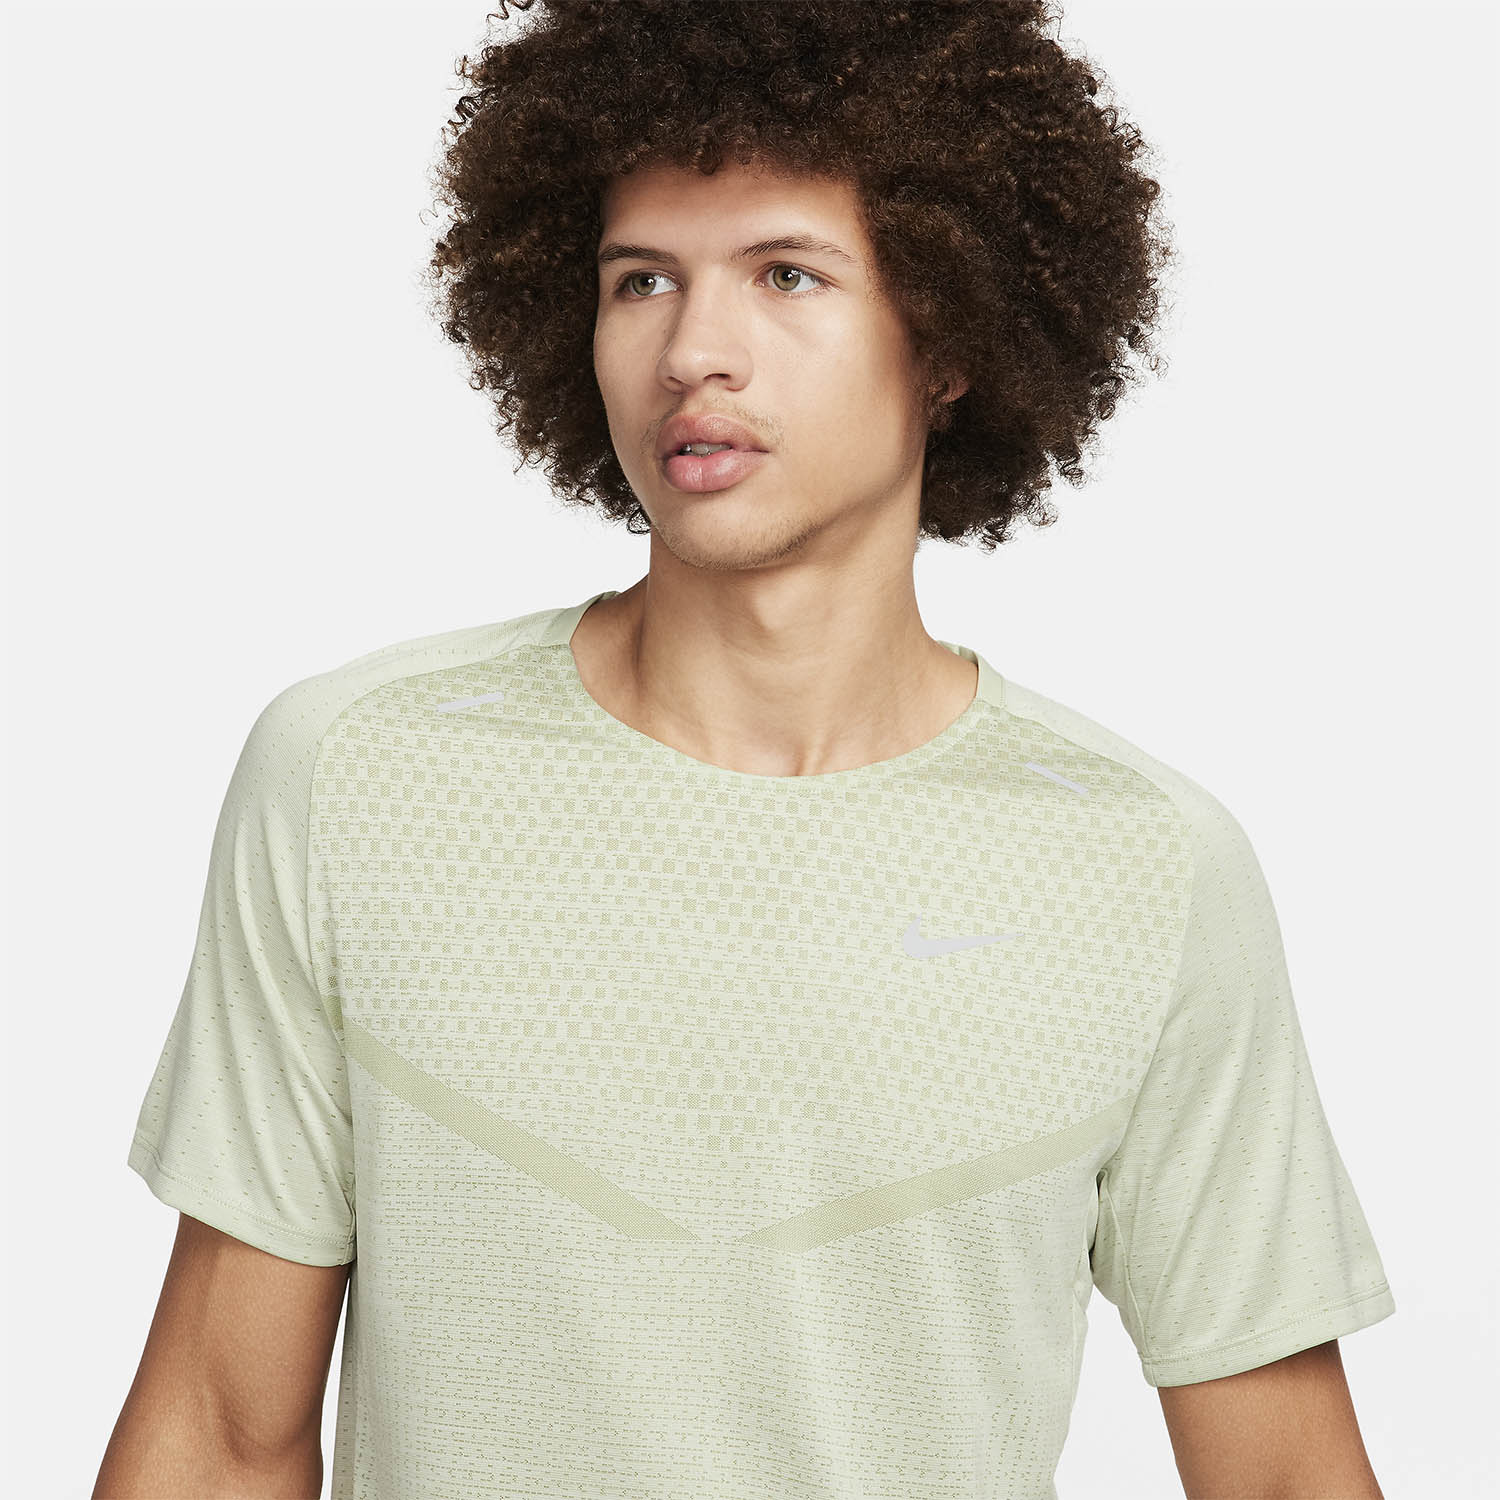 Nike Dri-FIT ADV Techknit Ultra Camiseta - Olive Aura/Sea Glass/Reflective Silver